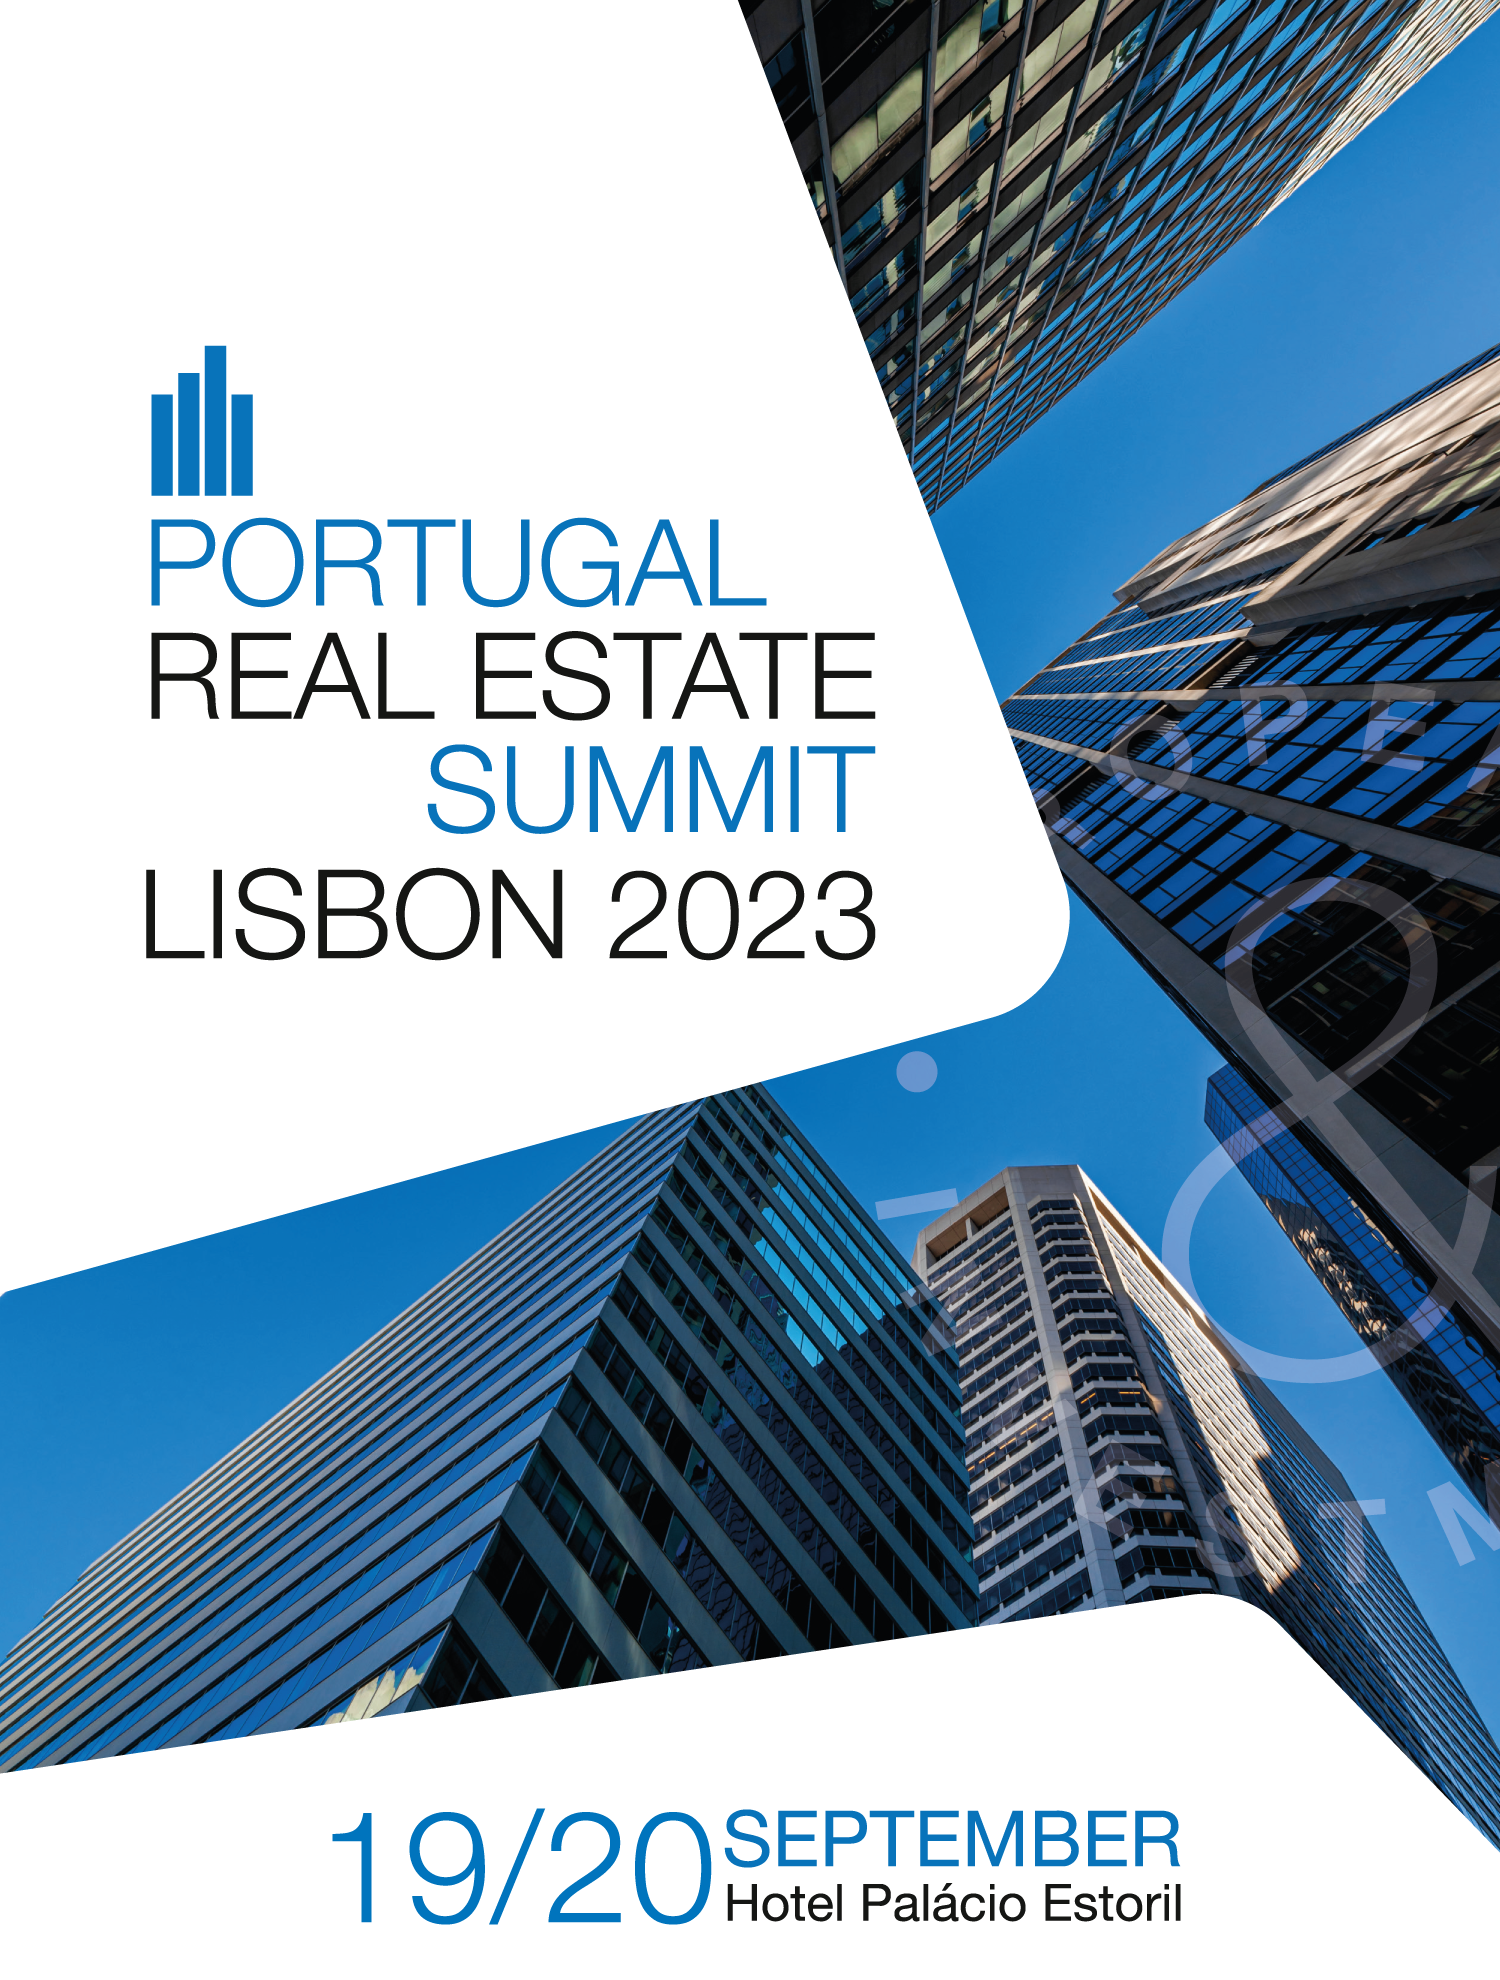 Portugal Real Estate Summit 2023. 26/27 September. Hotel Palácio Estoril